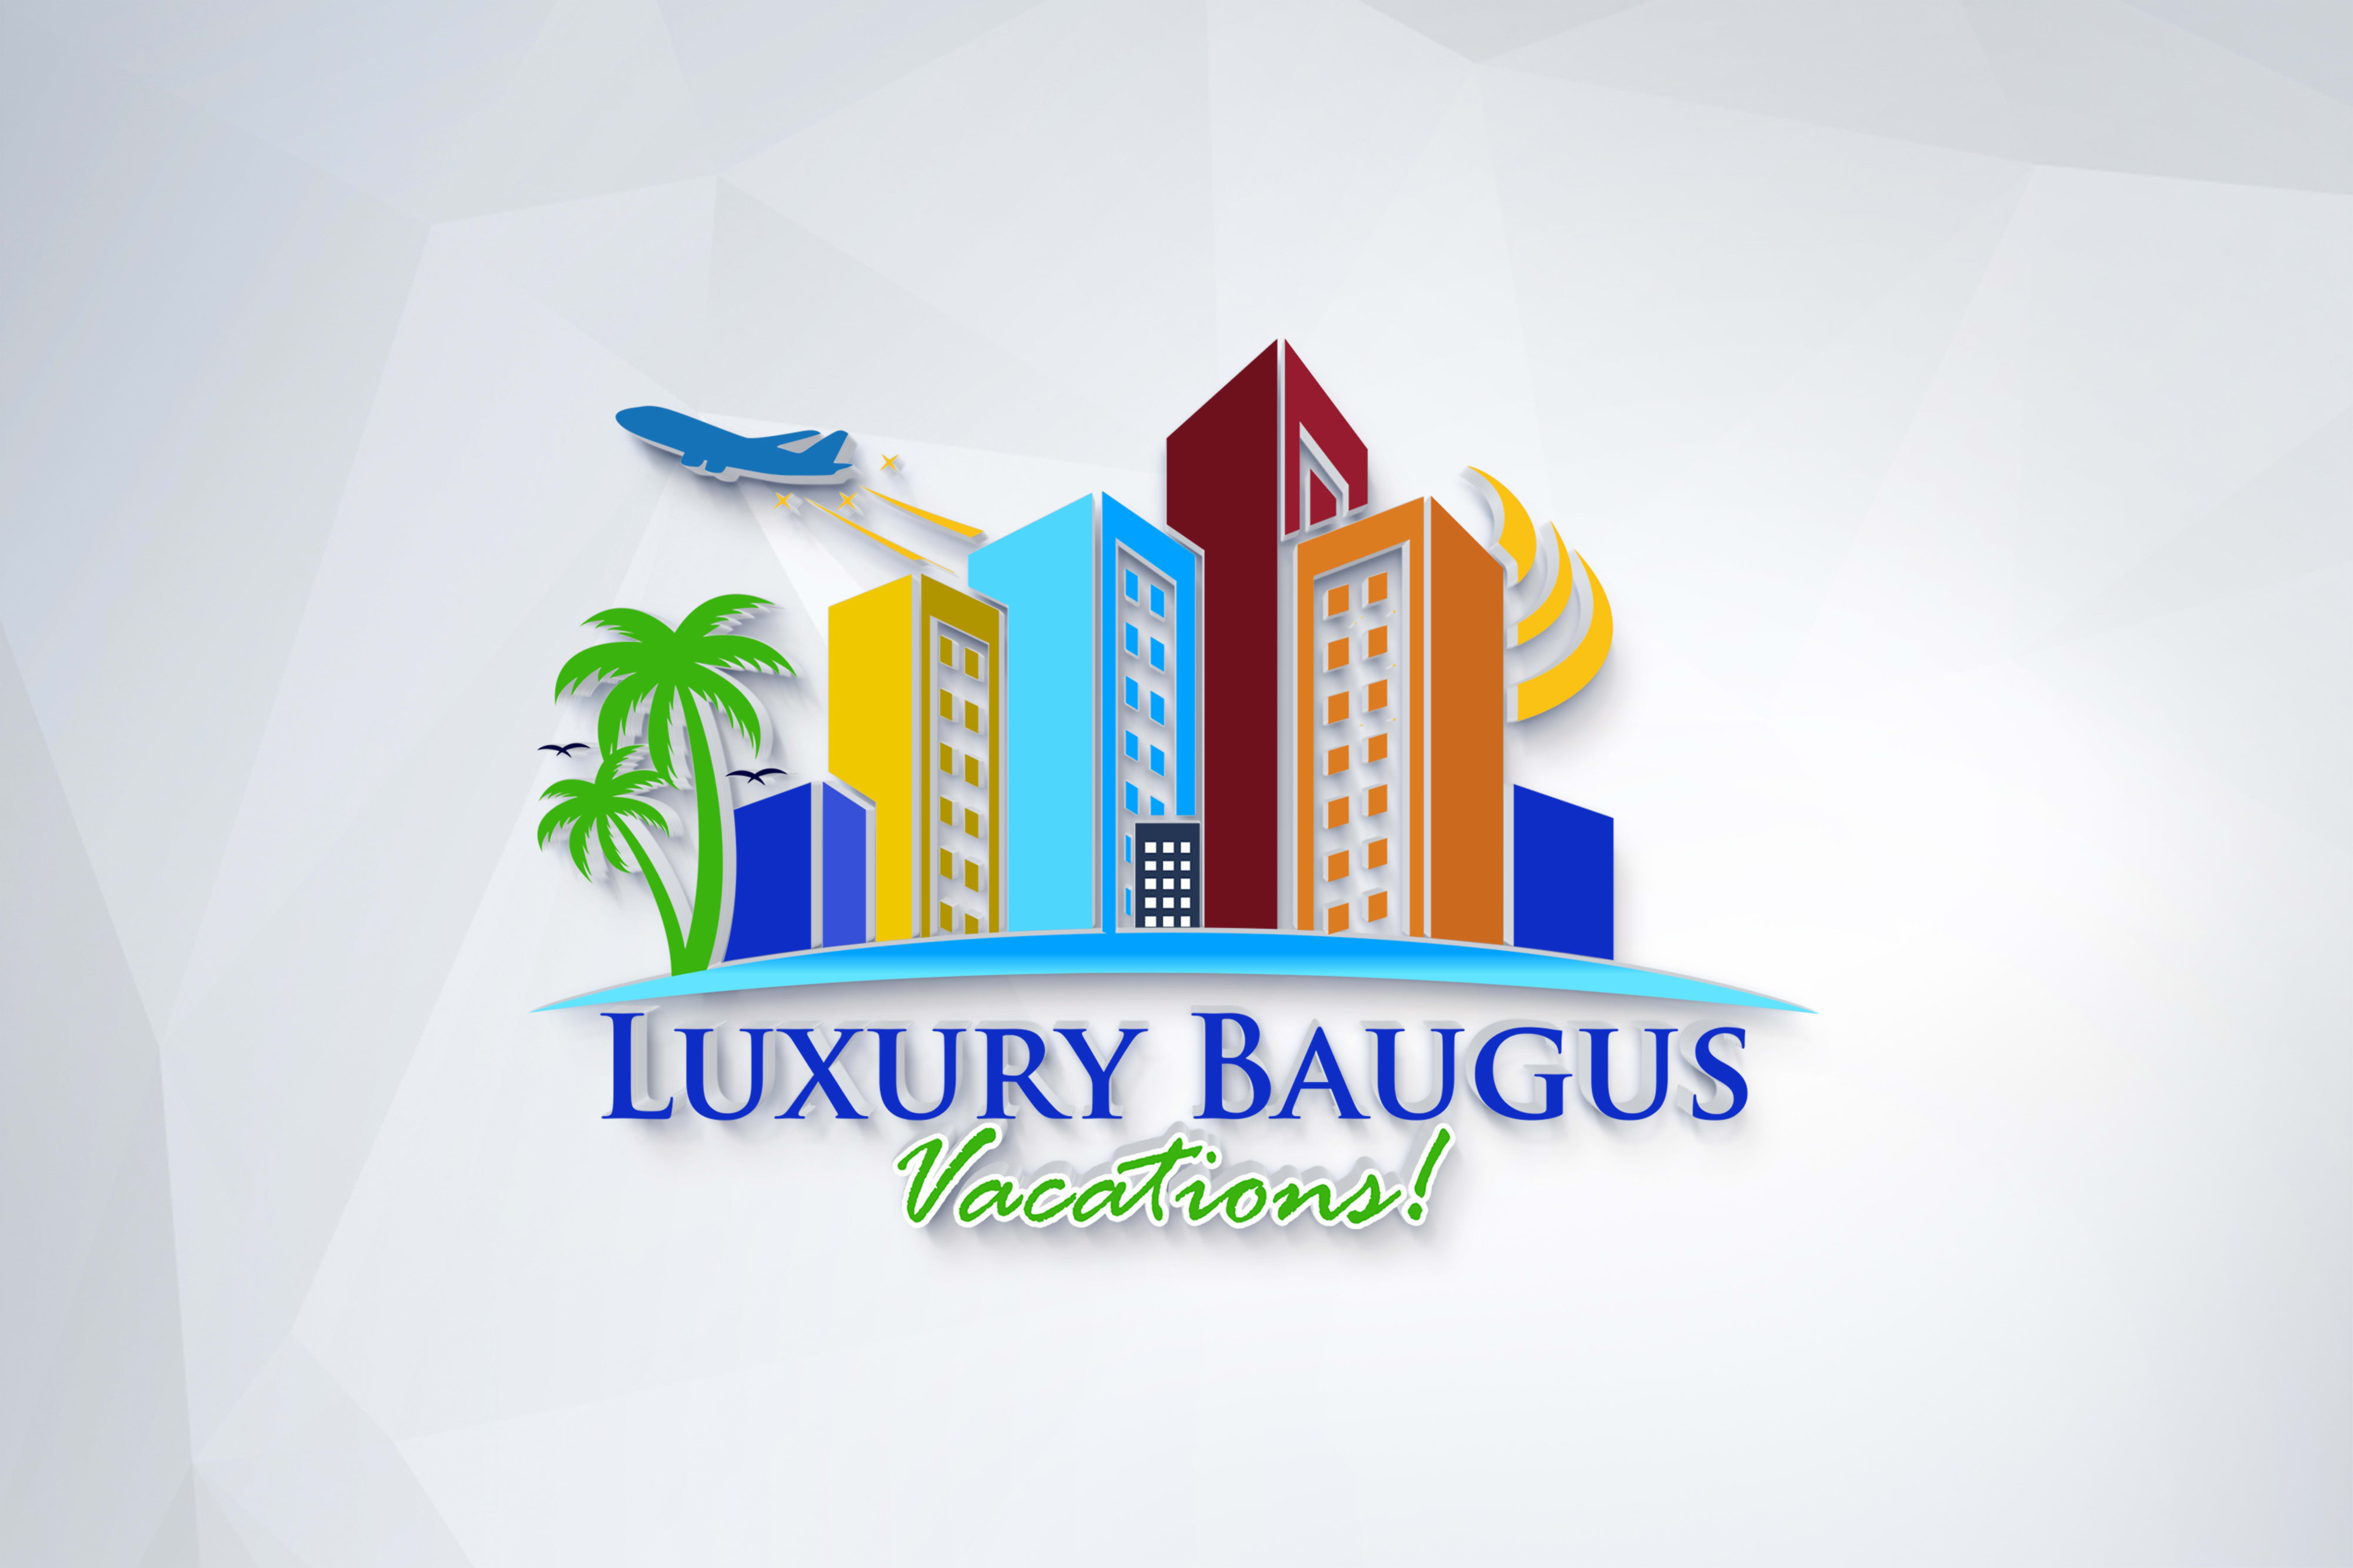 Luxury Baugus Vacations